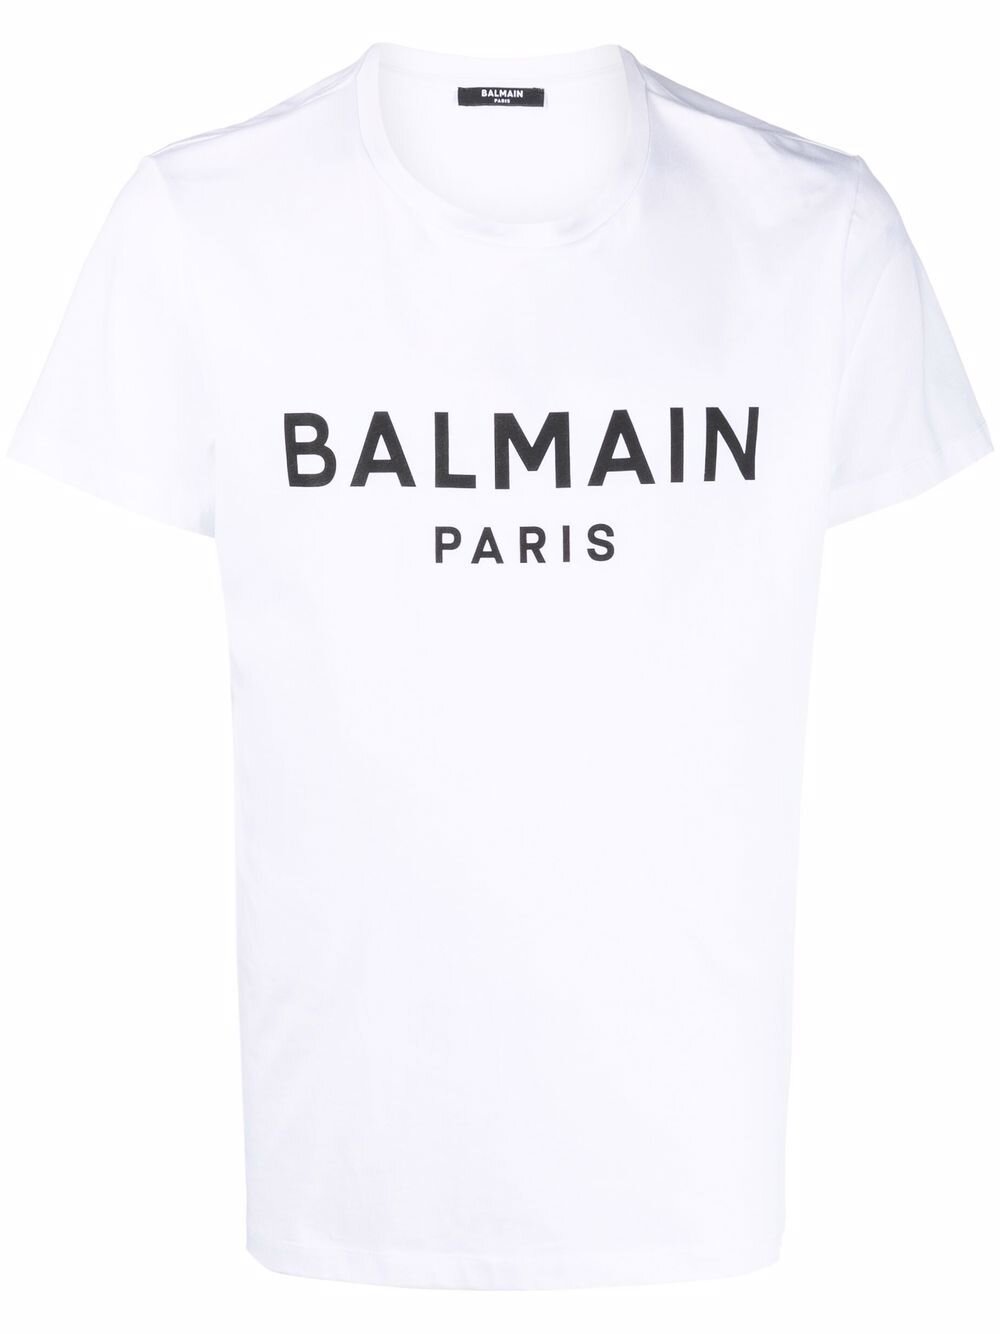 Balmain Paris Print Logo White T-shirt